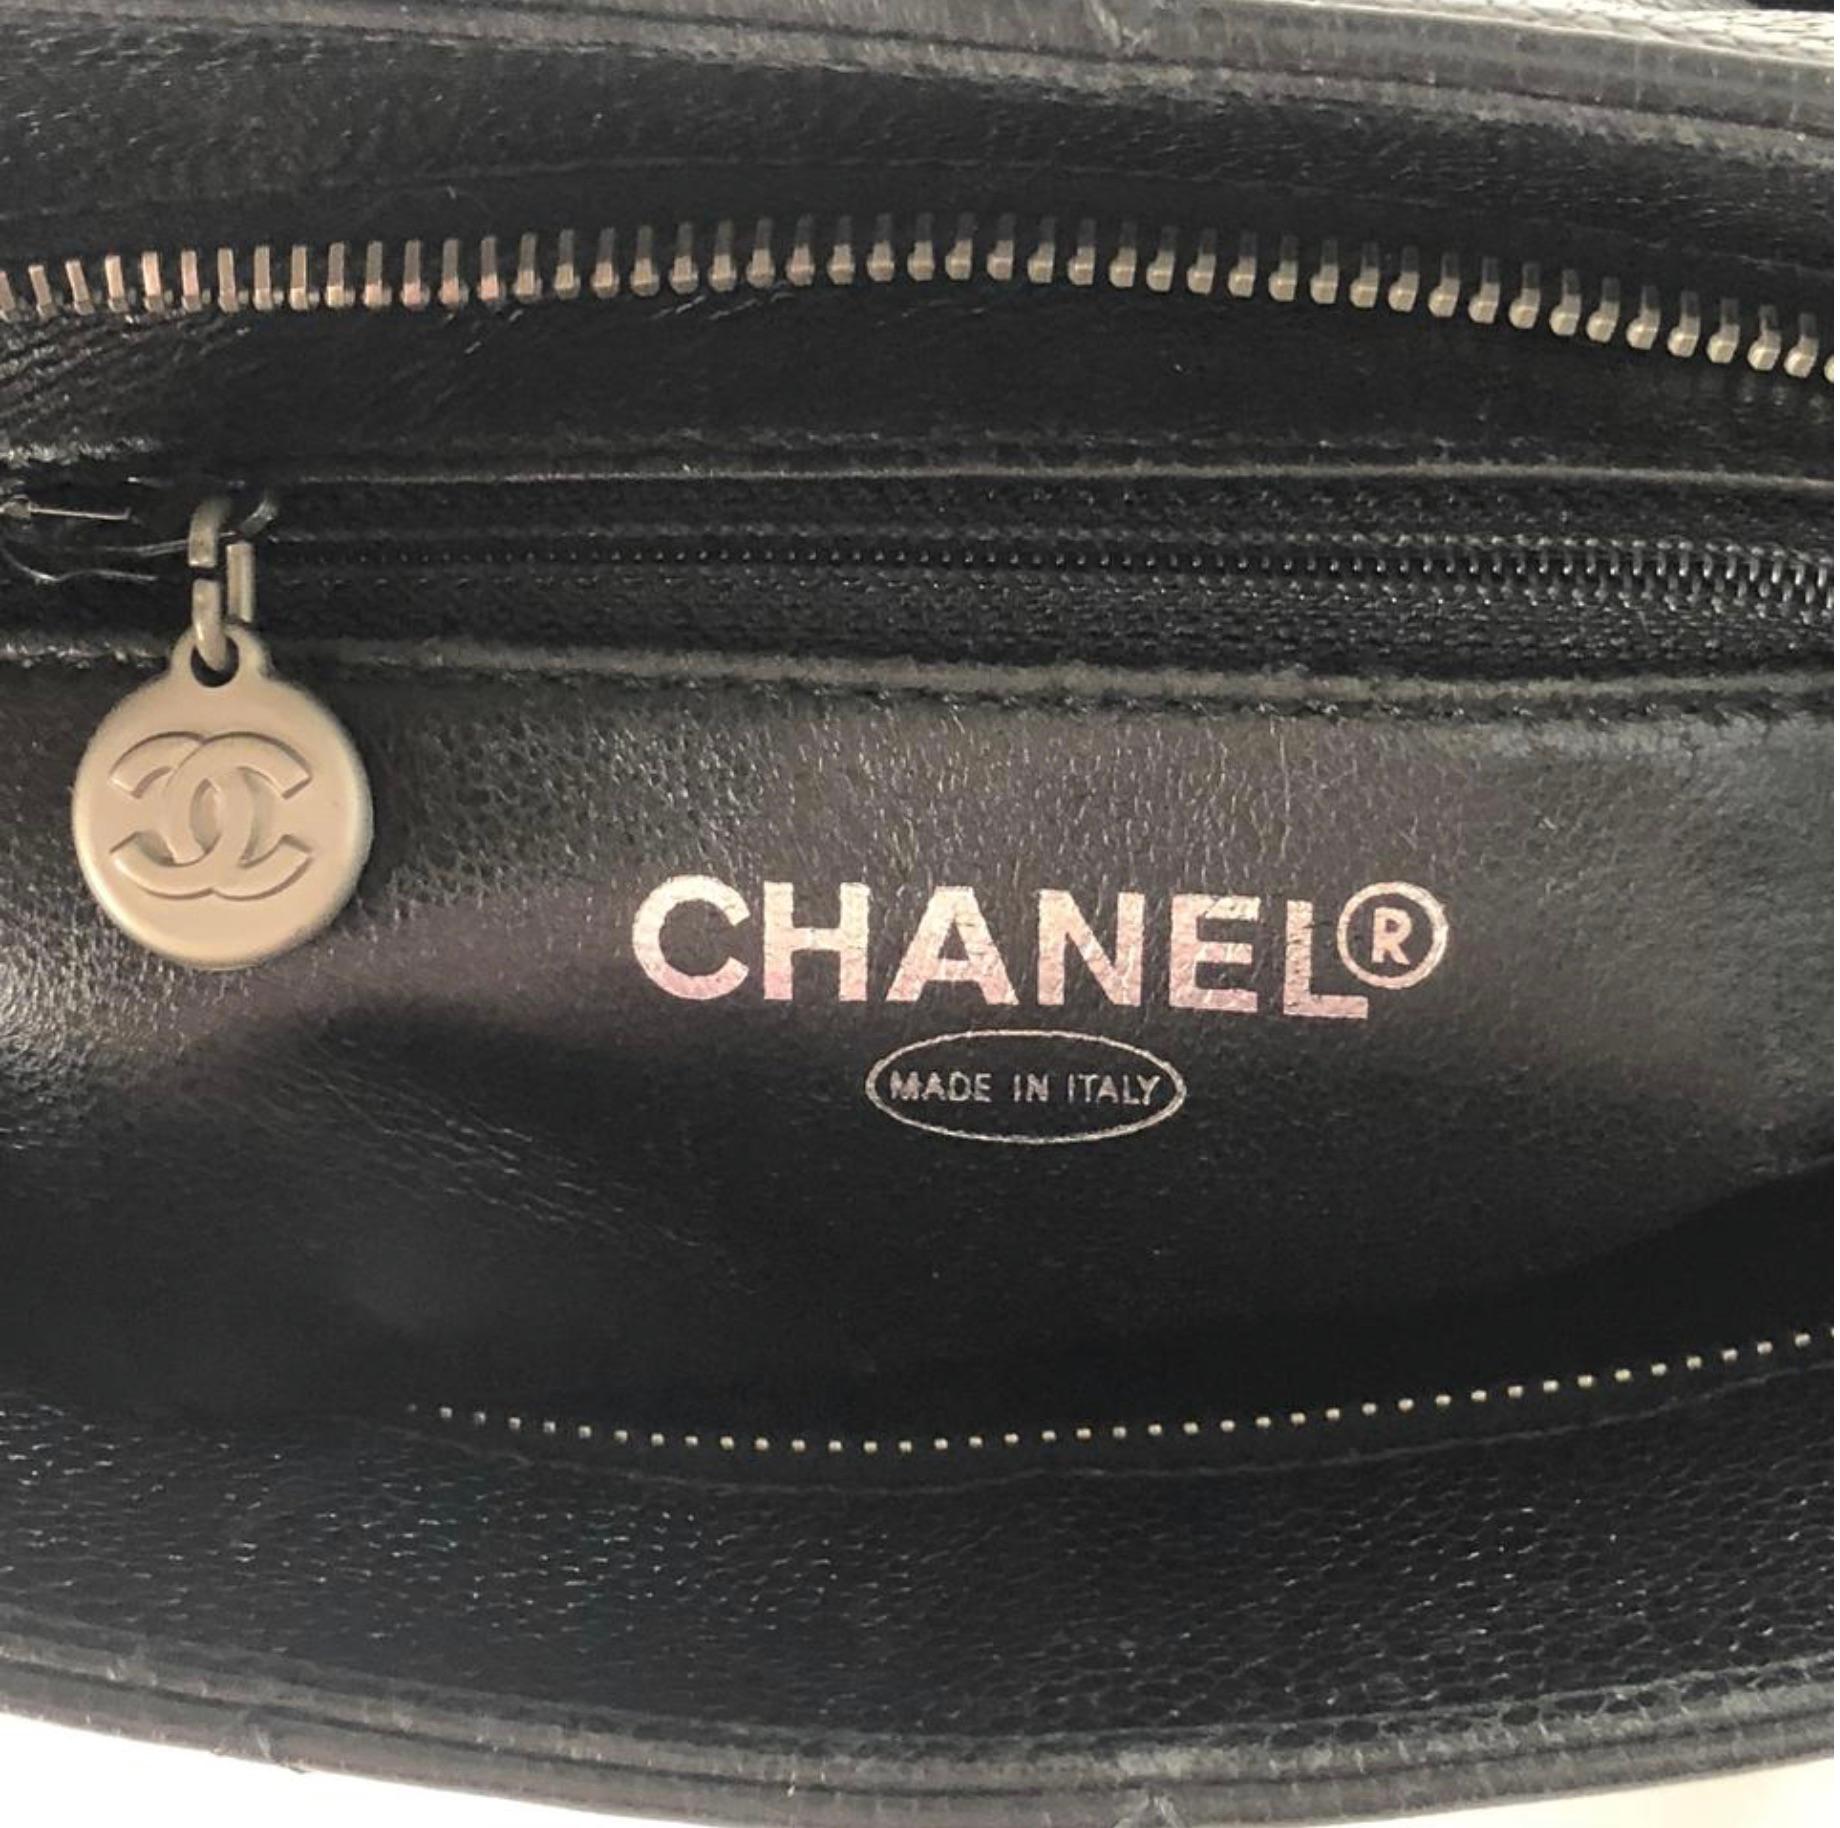  Chanel Caviar Leather Medallion with Silver Hardware in Black Shoulder Handbag For Sale 6